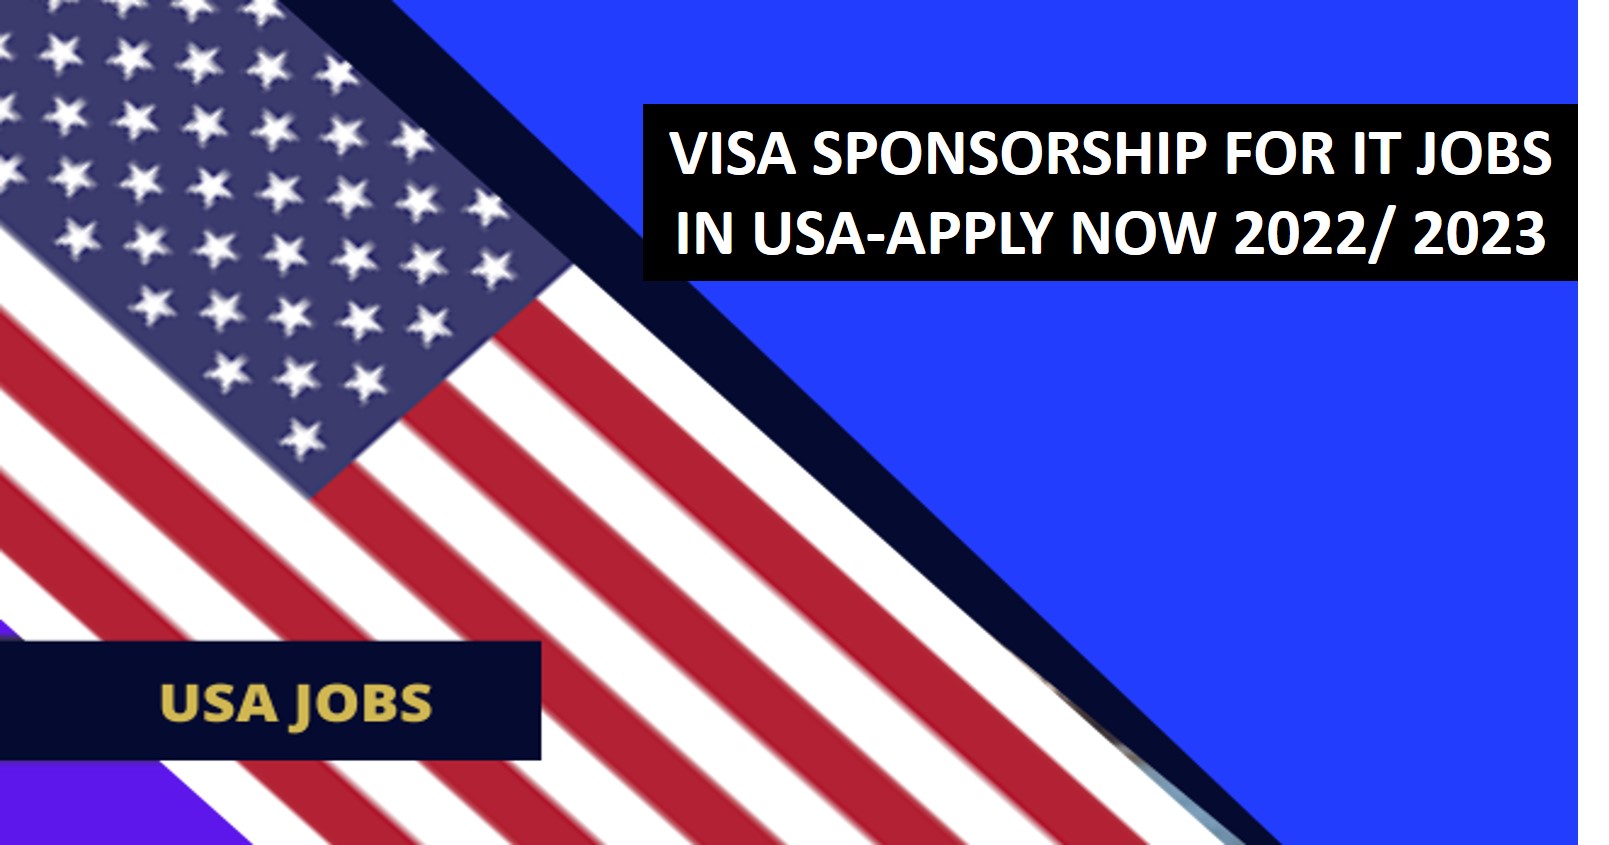 Visa sponsorship for IT jobs in USA